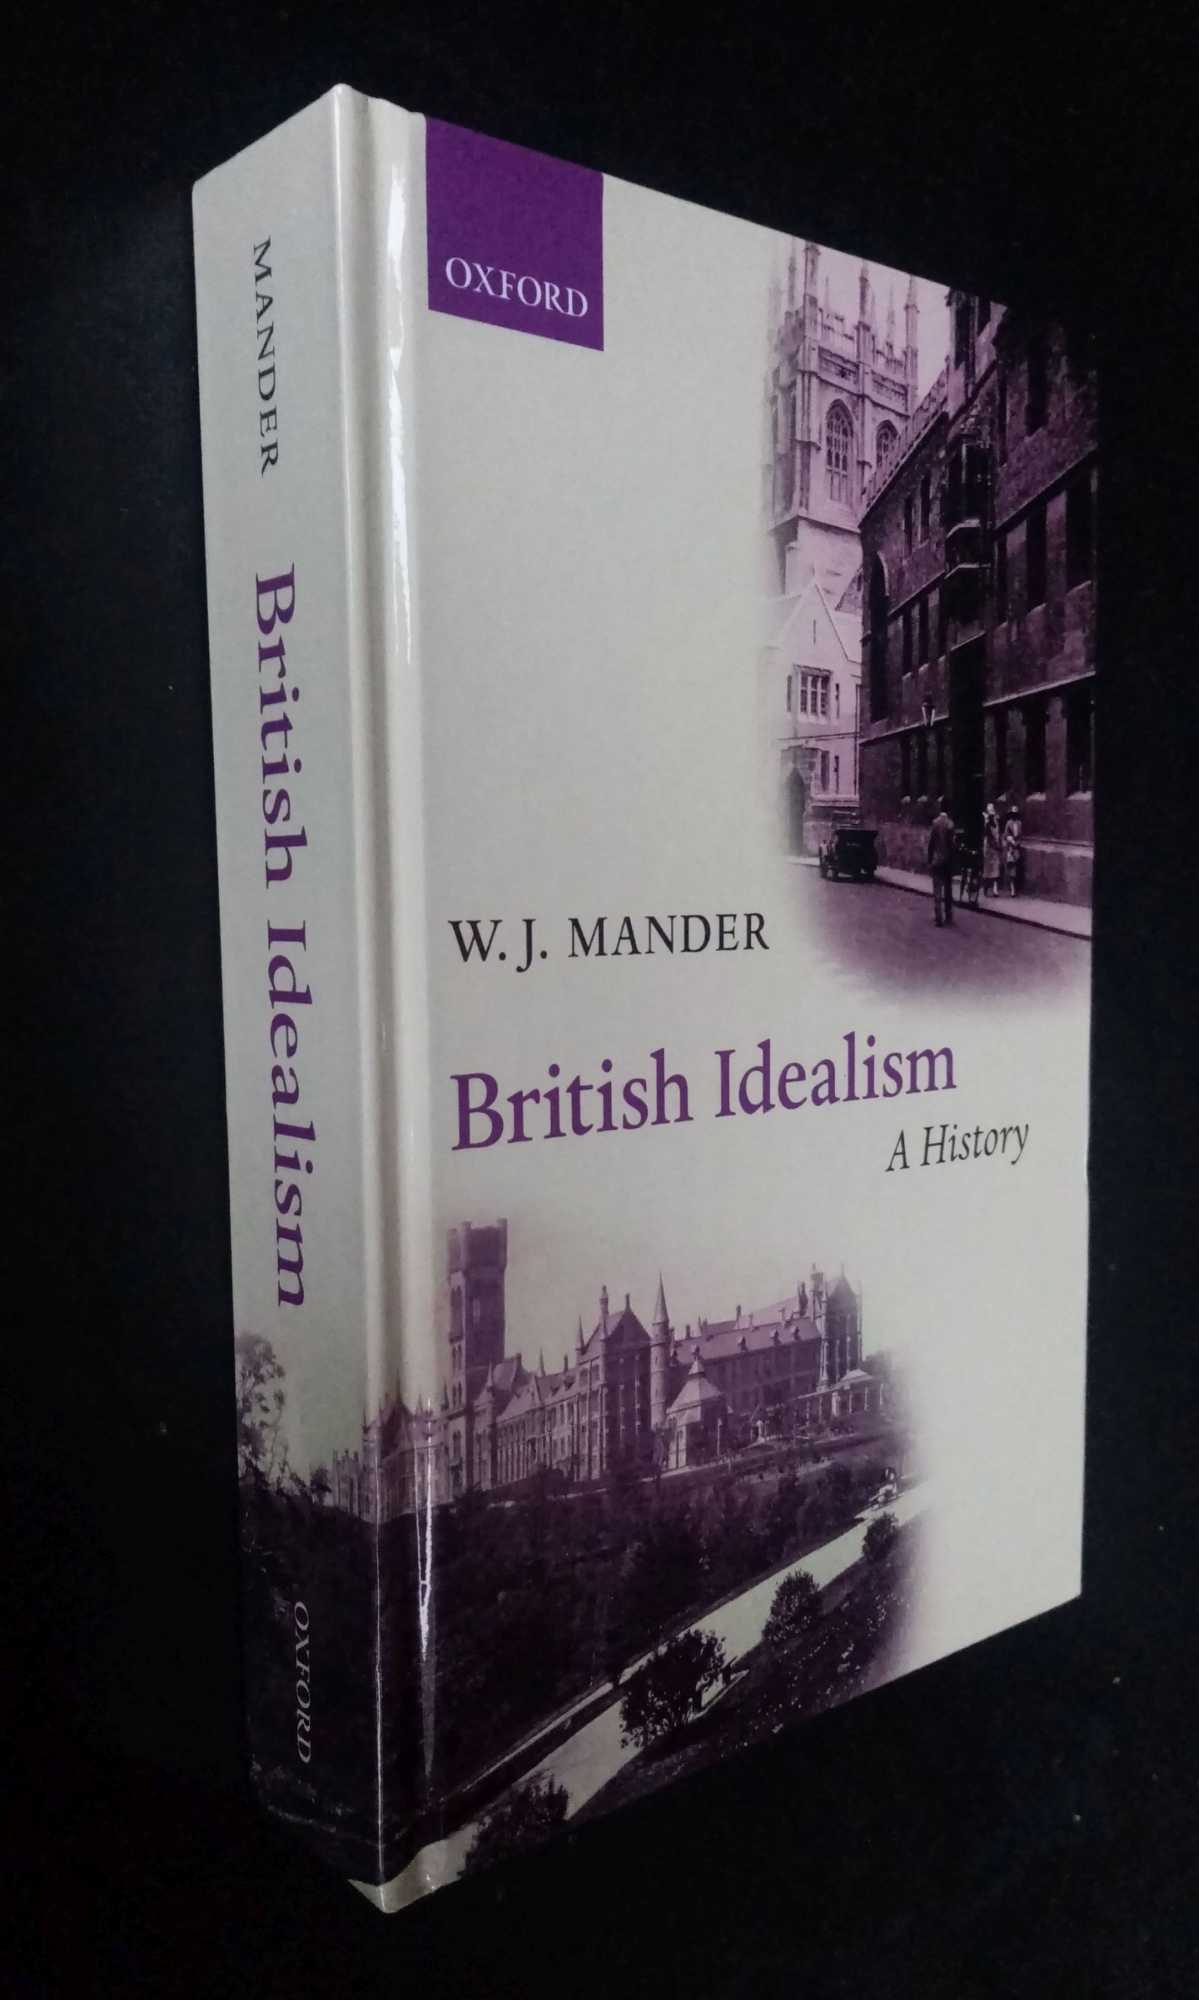 WJ Mander - British Idealism: A History